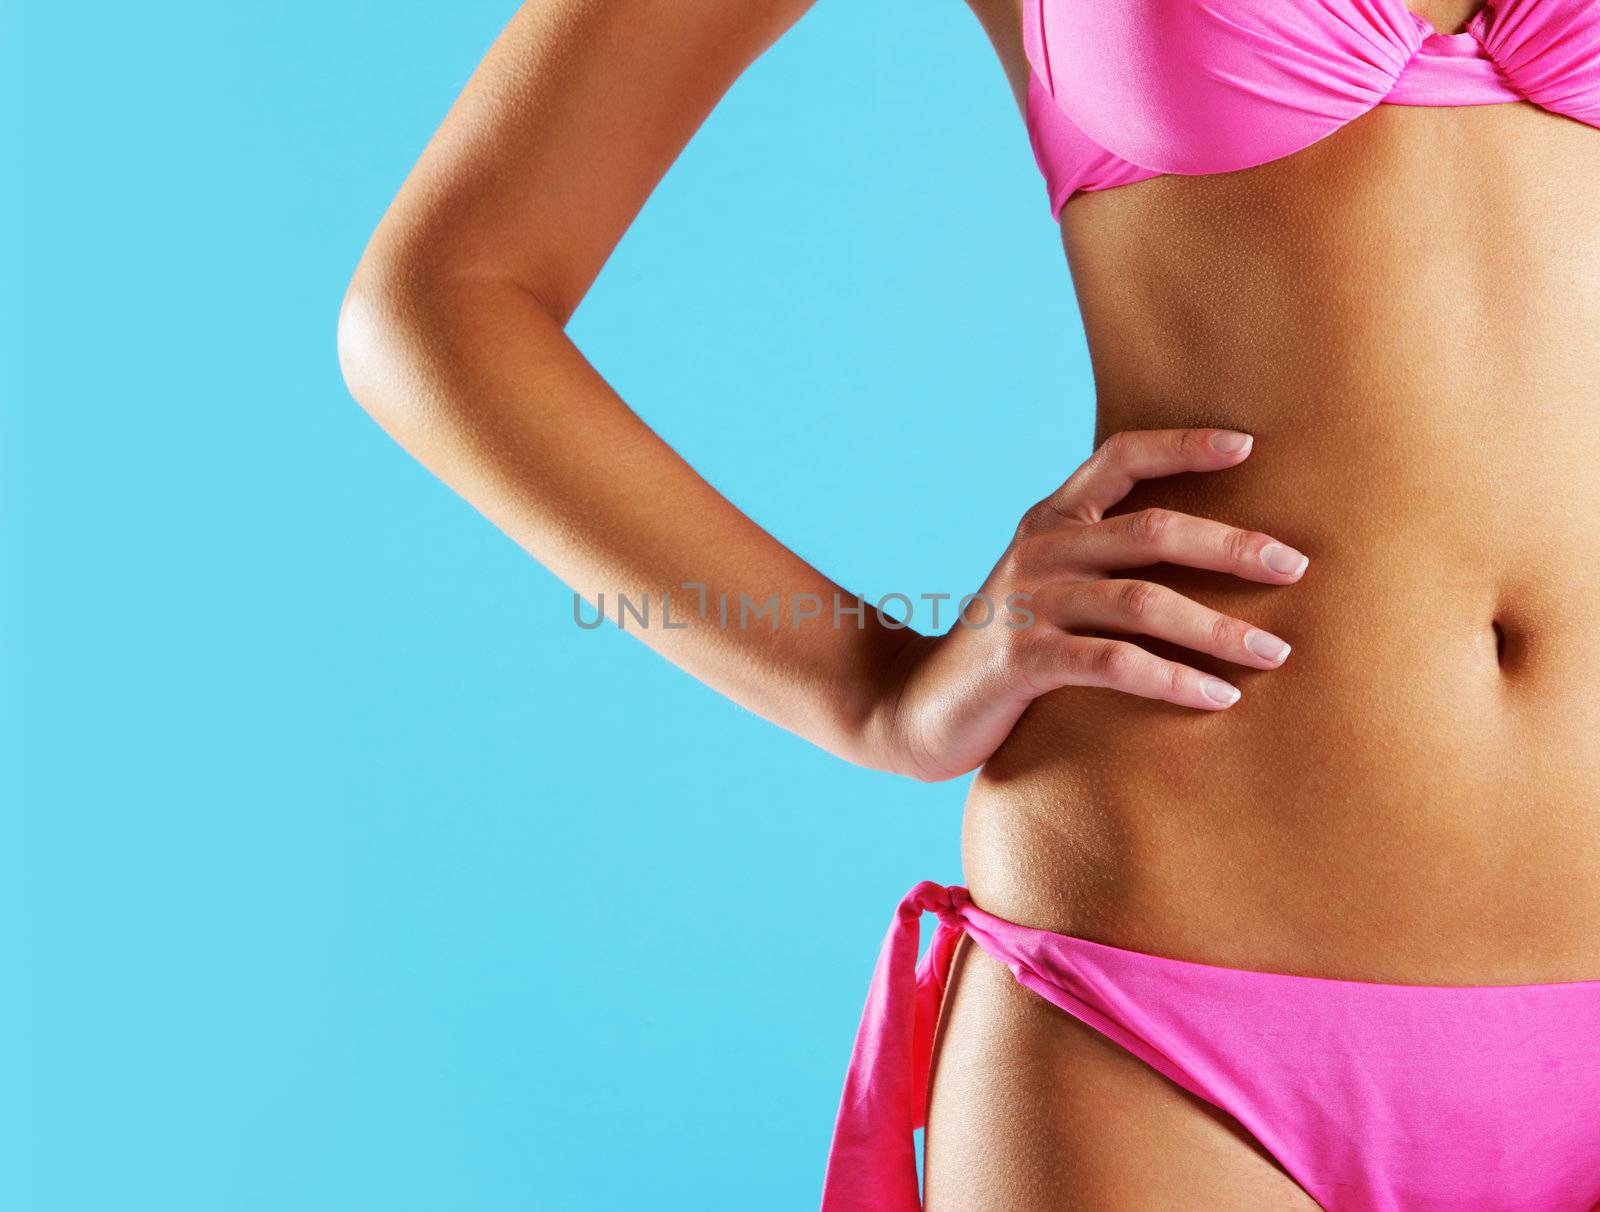 Woman wearing string bikini, close-up of abdomen